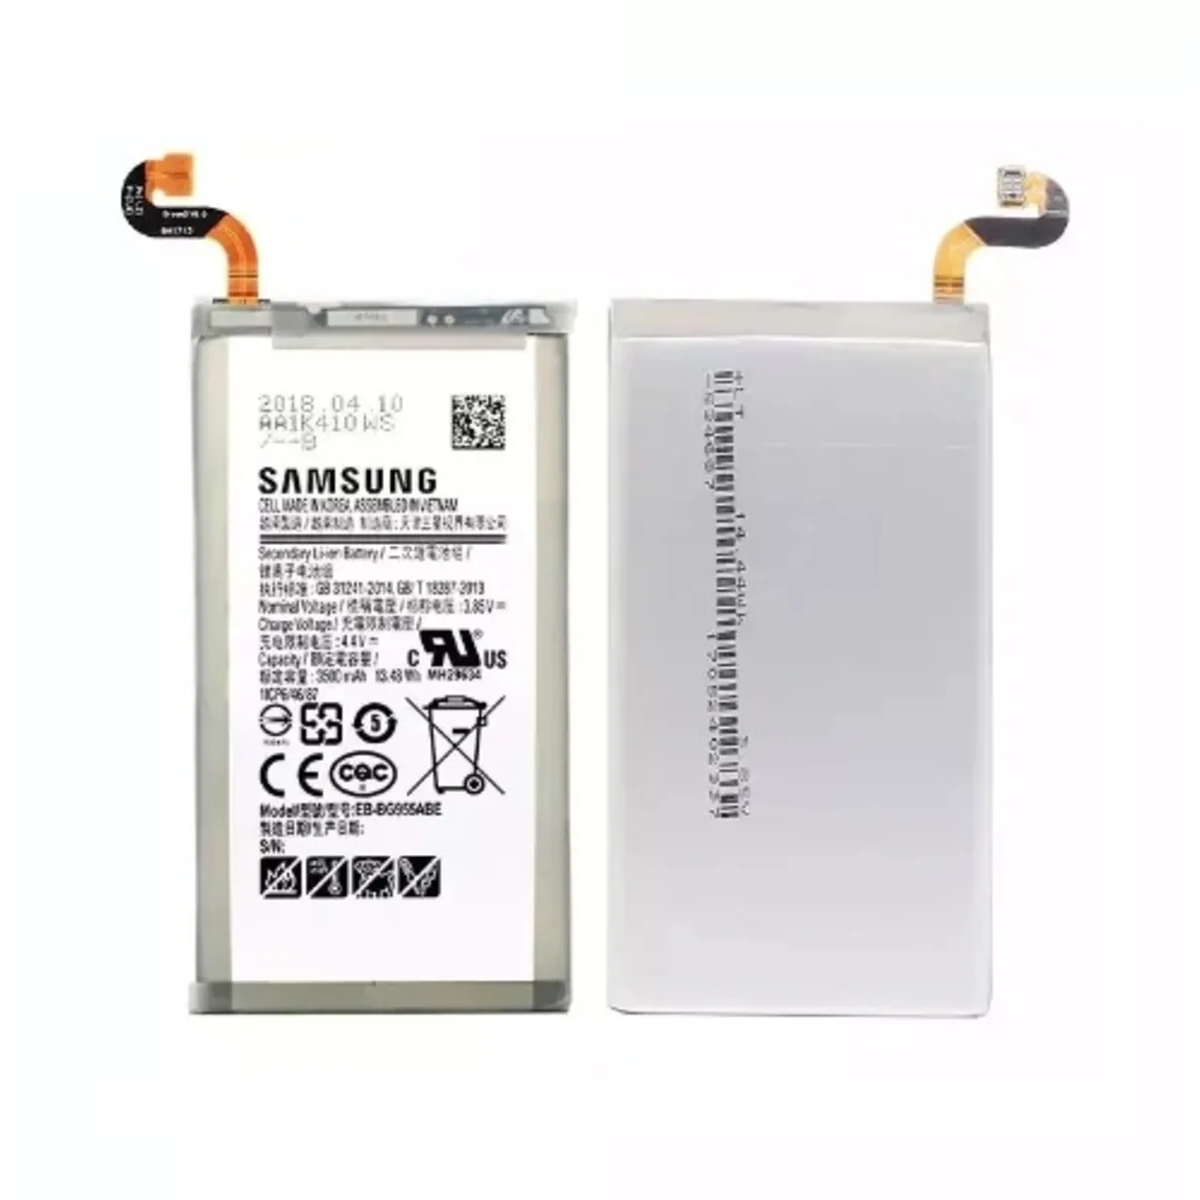 samsung galaxy s8 plus replacement battery techbay electronics kenya.jpg